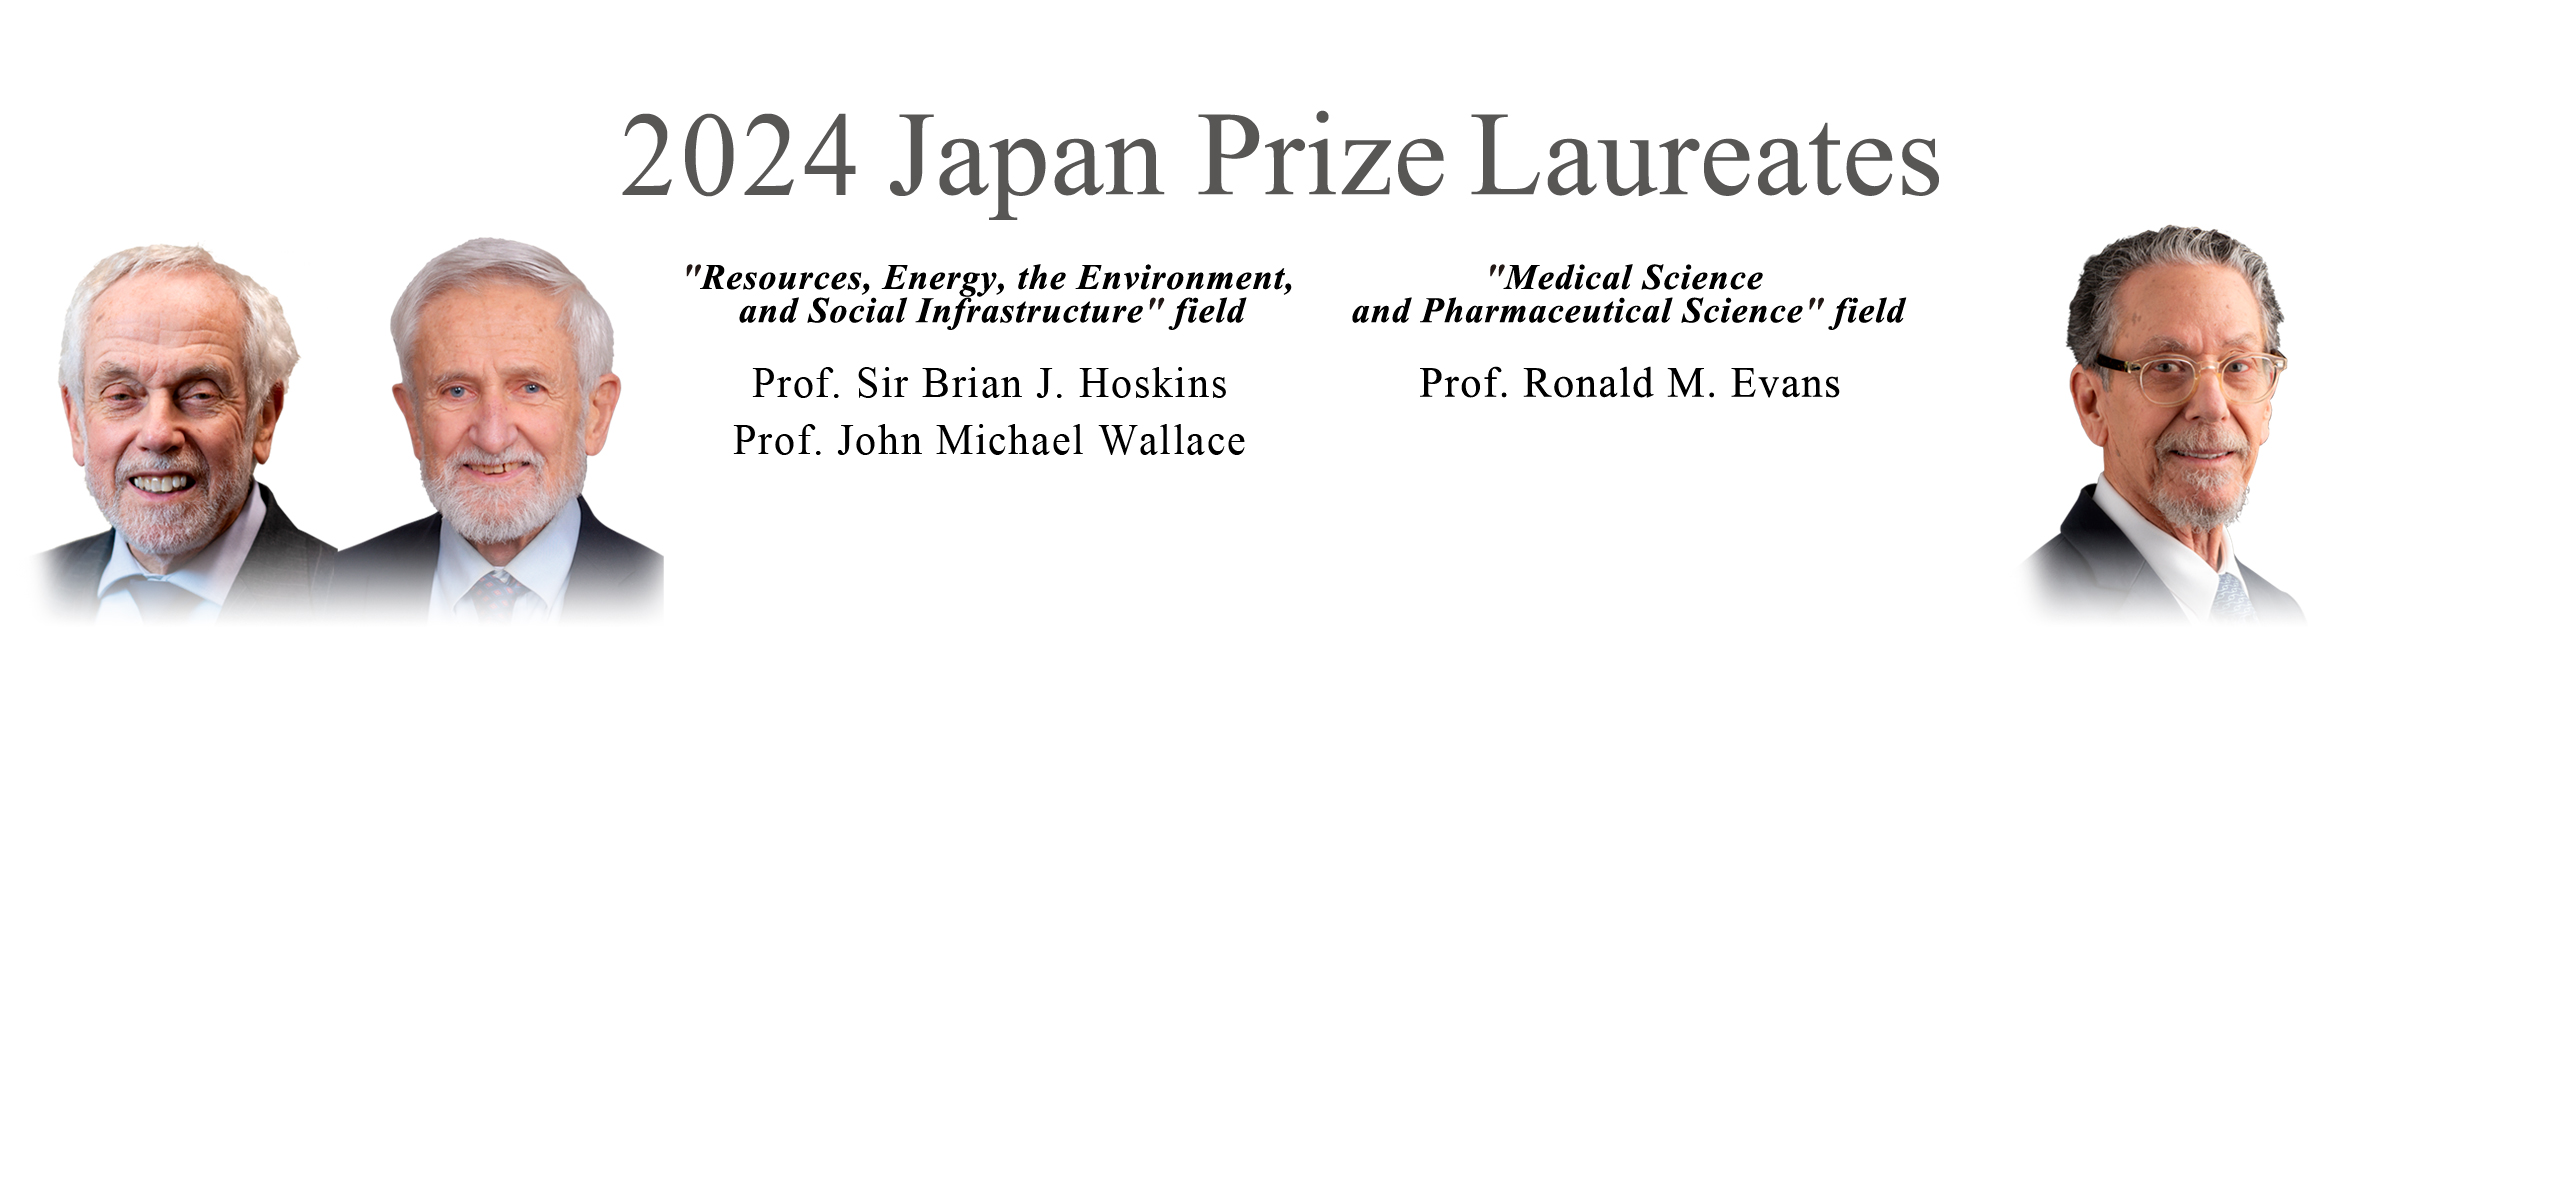 The Japan Prize Foundation